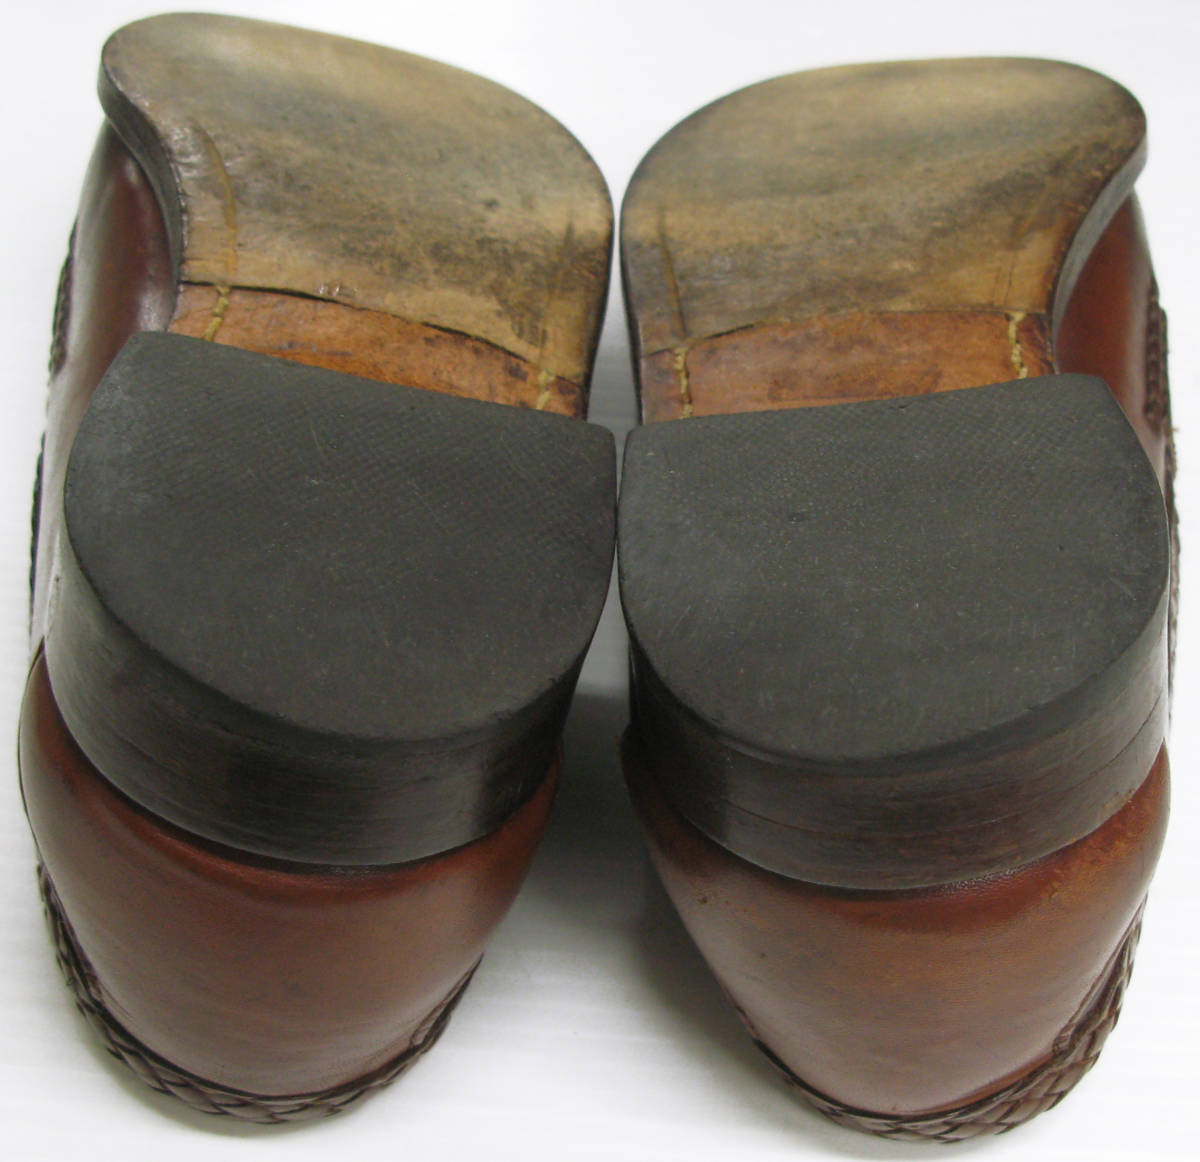 ALLEN EDMONDS Maxfield 47716 Brown Leather Tassel Loafers Shoes Men\'s Size 9 (a Len Ed monz кисточка Loafer чай 9 кожа обувь 